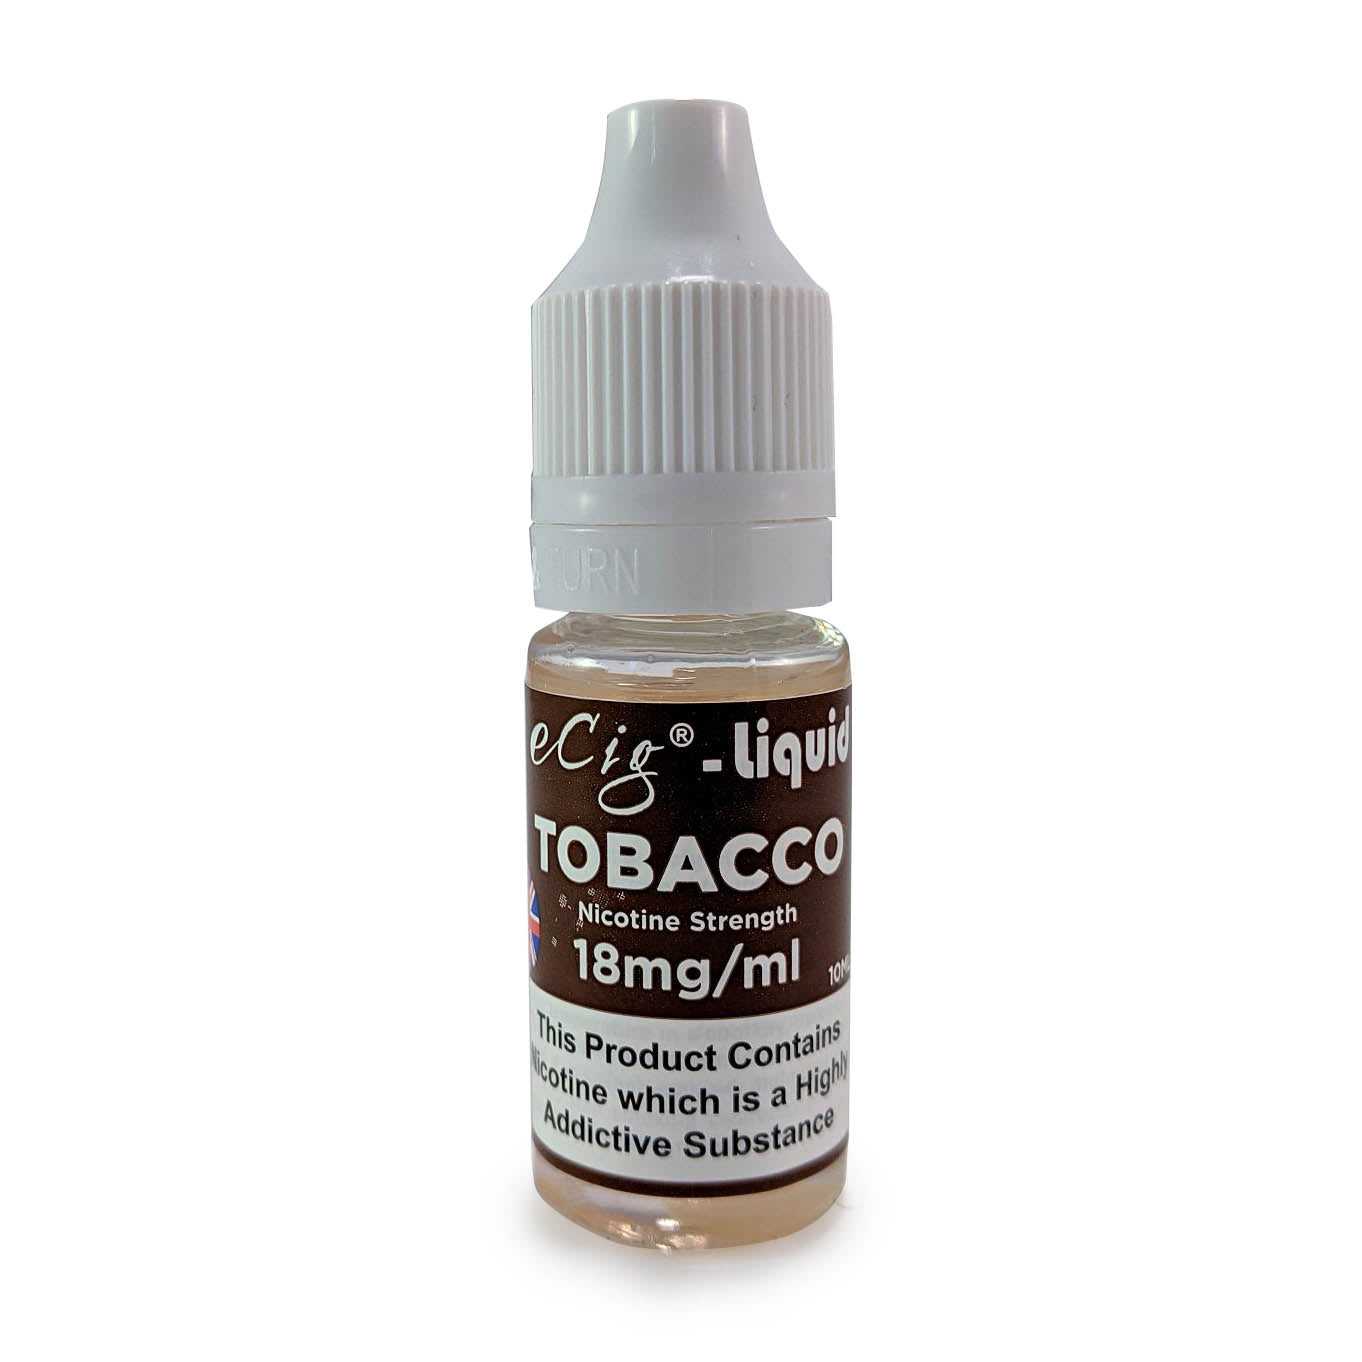 eCig-liquid Tobacco 18mg 10 Pack